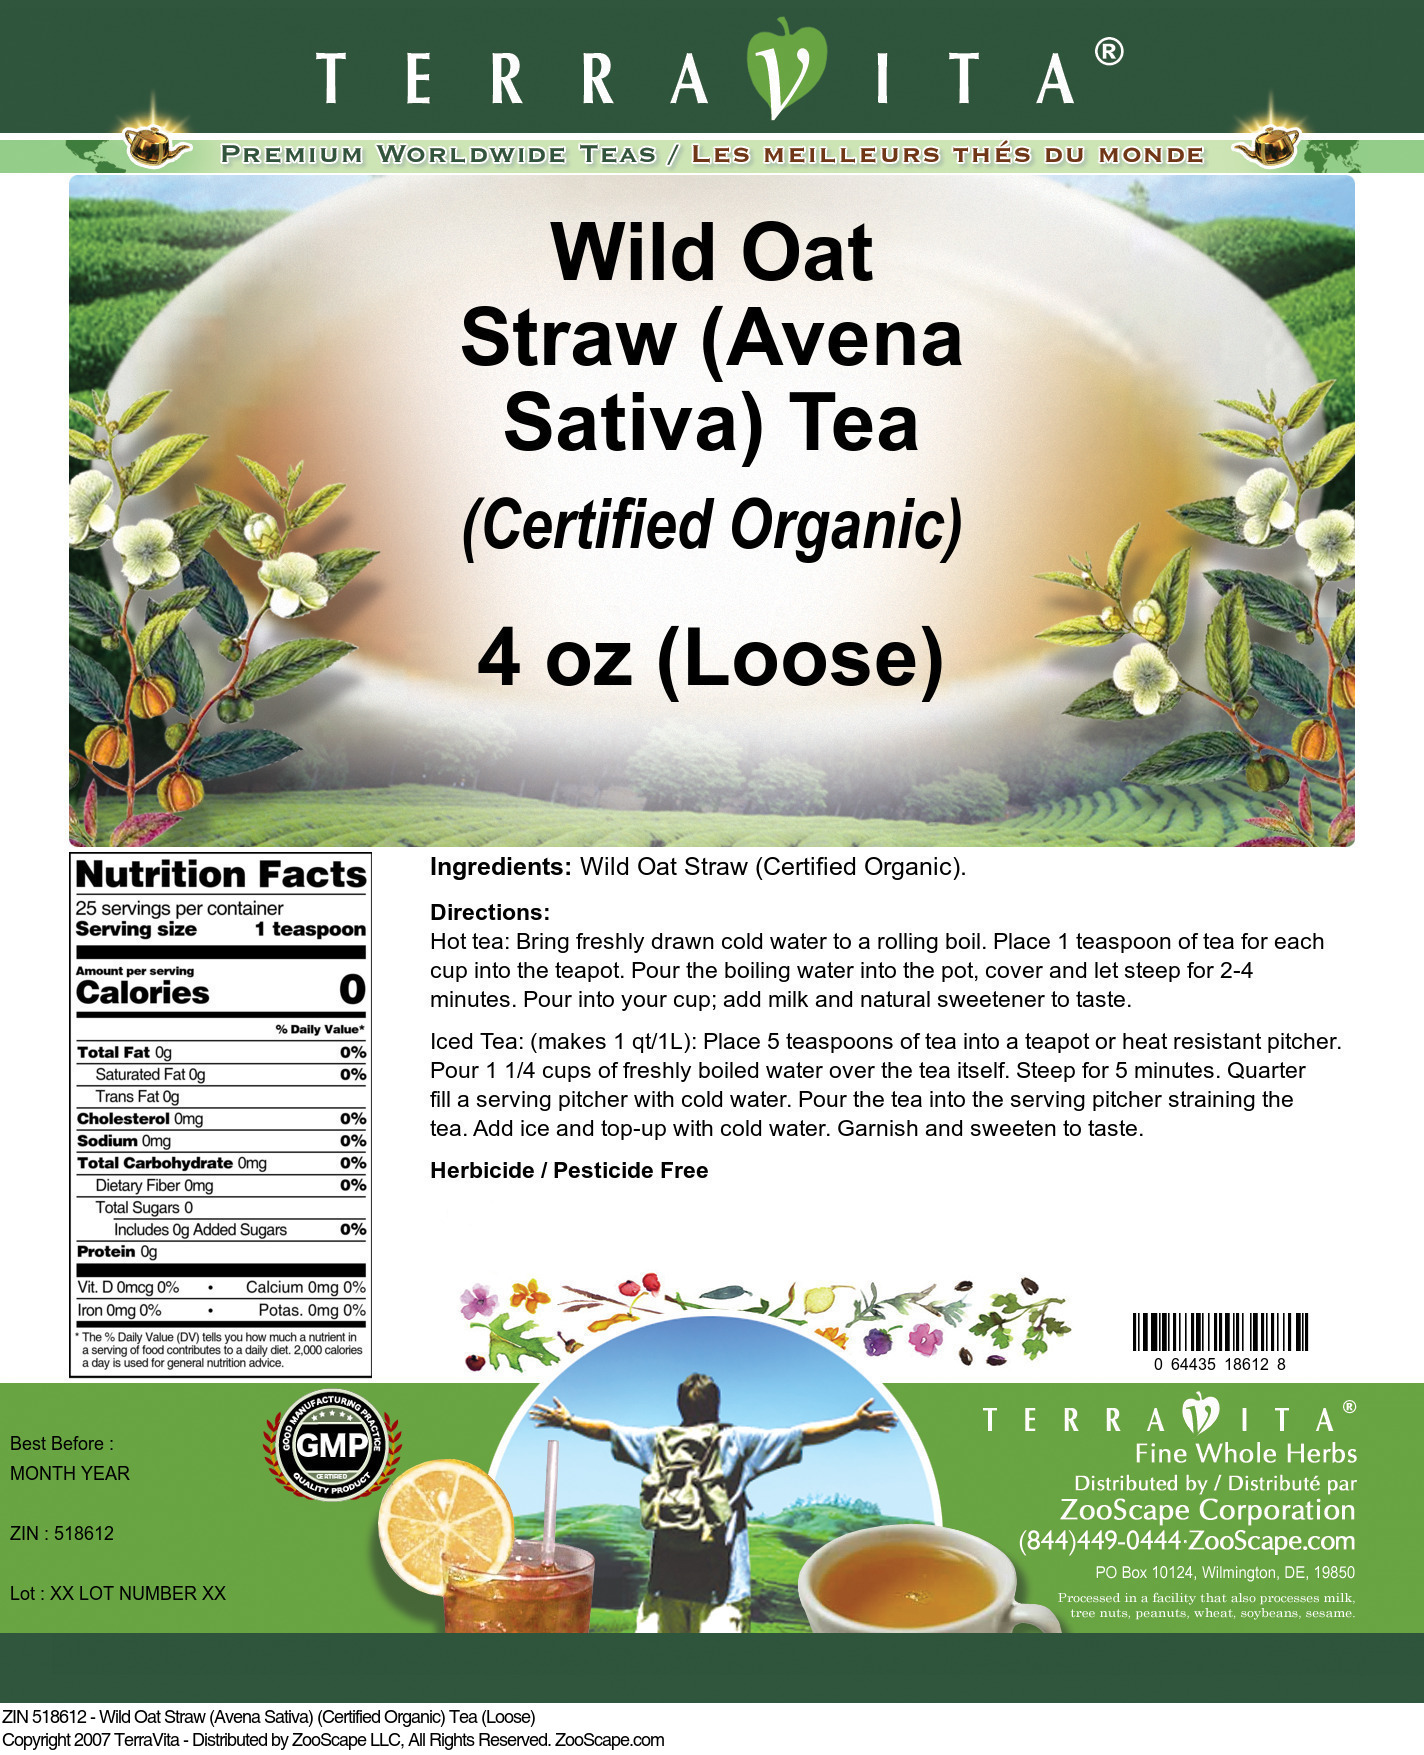 Wild Oat Straw (Avena Sativa) (Certified Organic) Tea (Loose) - Label